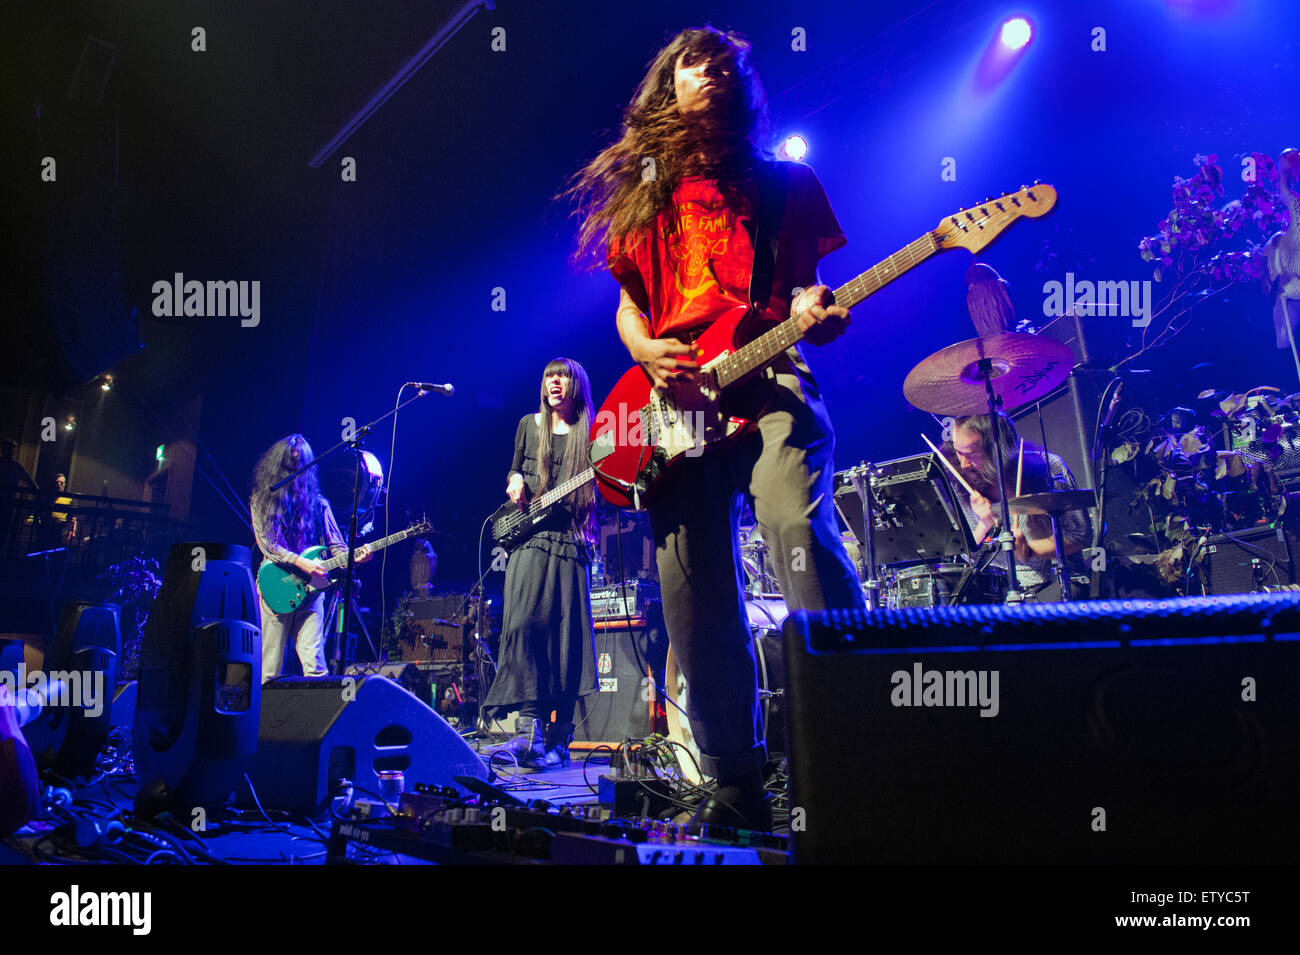 La londinese Japanese rock band Bo Ningen in concerto al Ritz, Manchester il 16 giugno 2015. Foto Stock